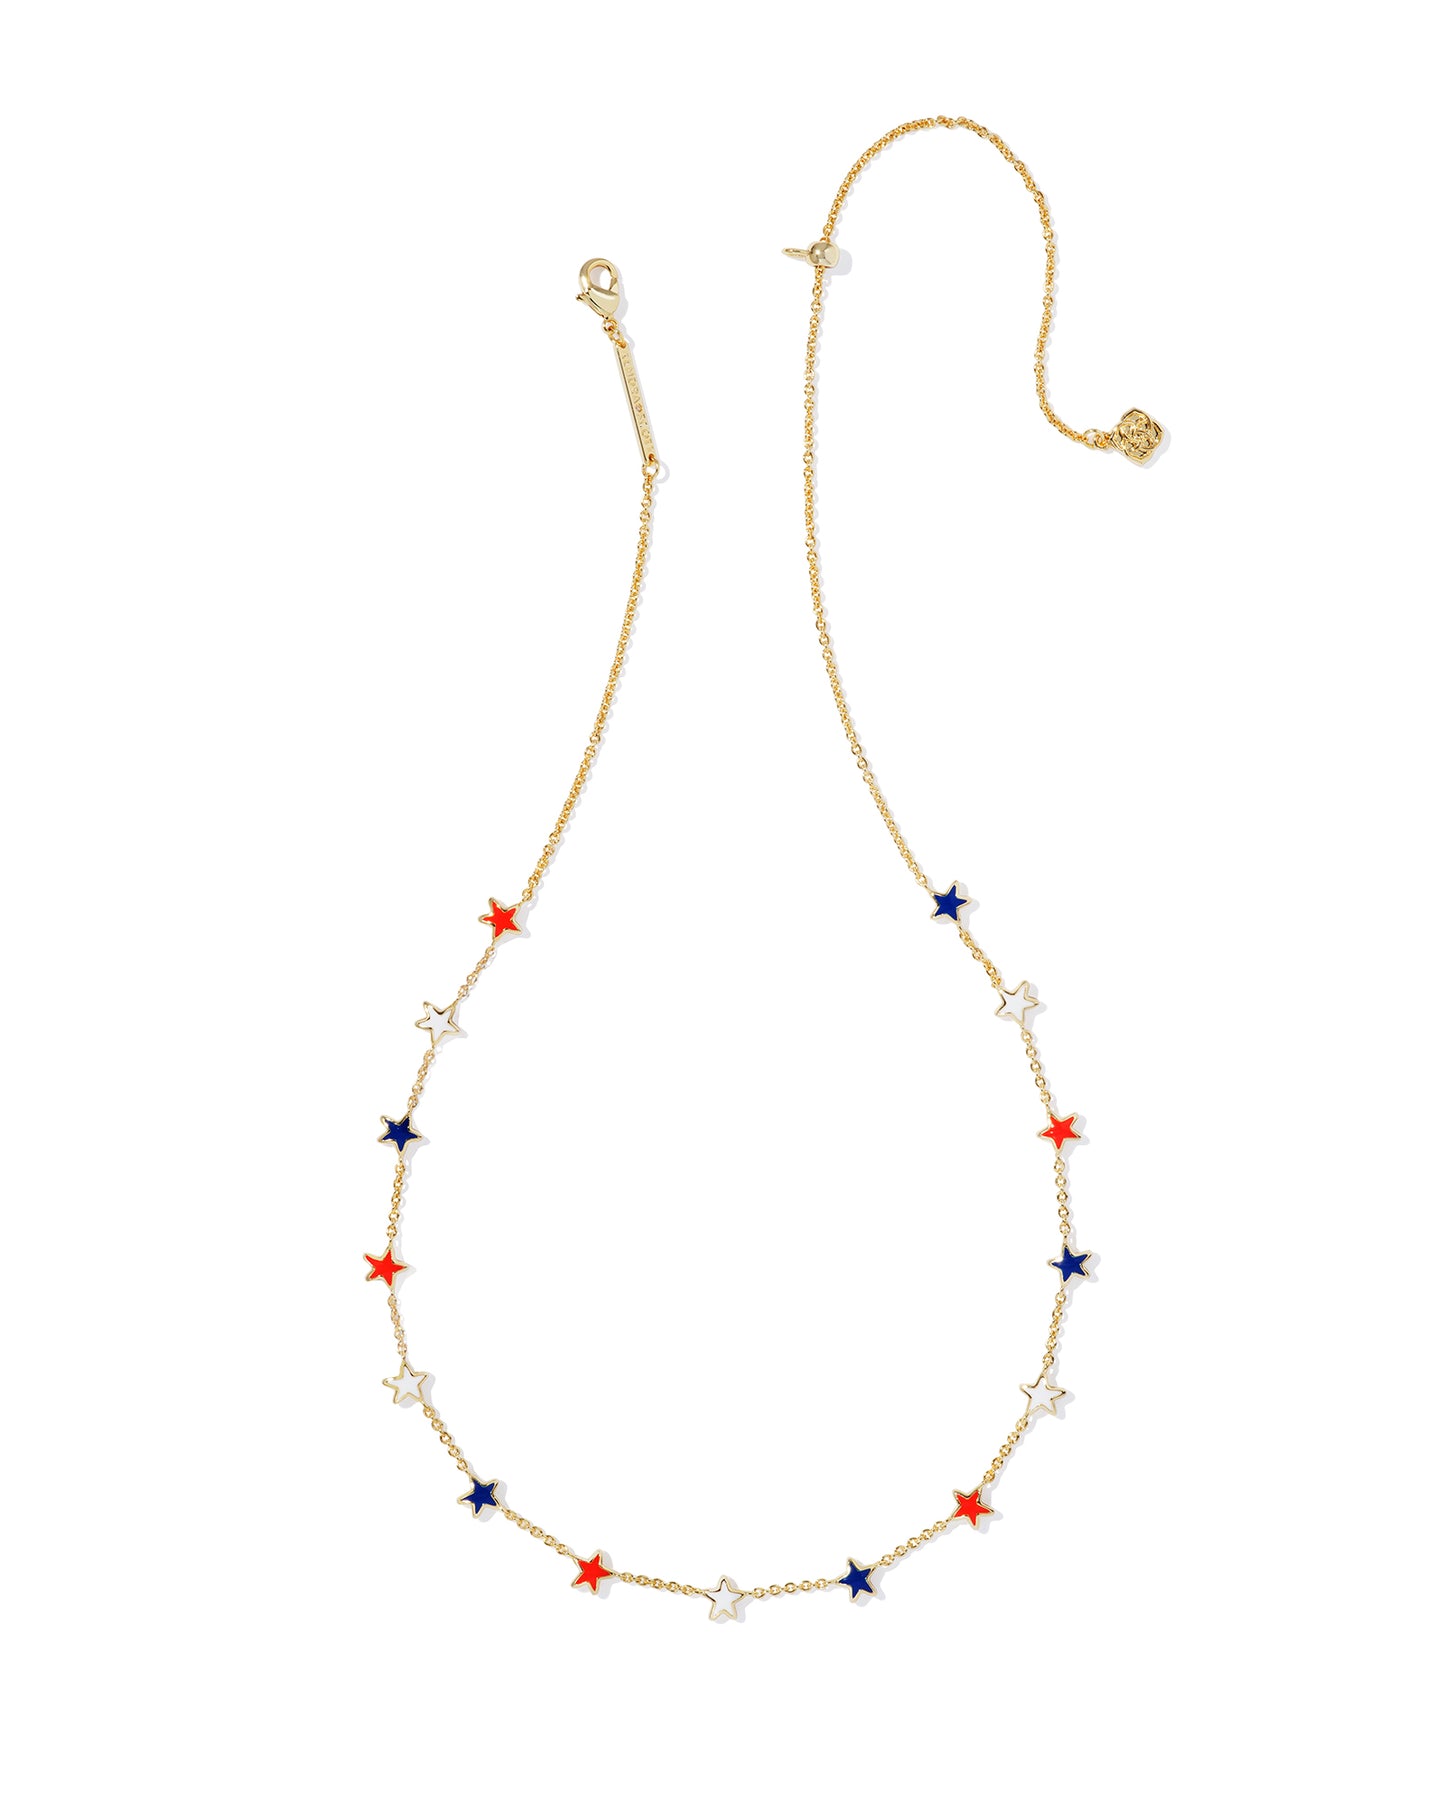 KENDRA SCOTT: SIERRA STAR NECKLACE GOLD RED/WHITE/BLUE MIX